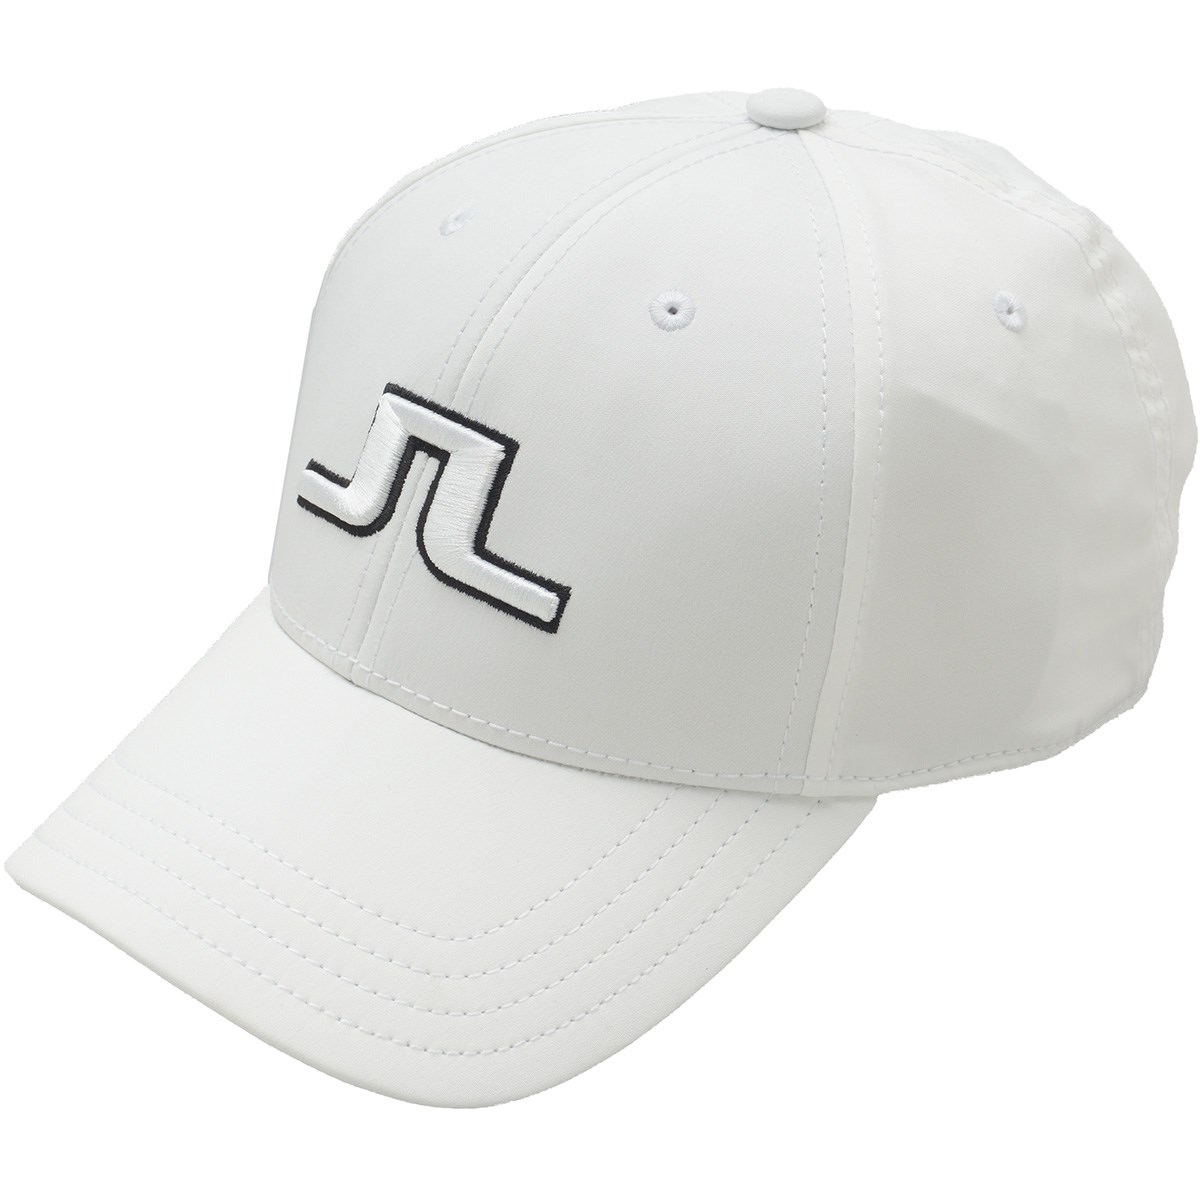 「J.リンドバーグ テック ストレッチ キャップ 」（帽子）- ゴルフ(GOLF)用品のネット通販